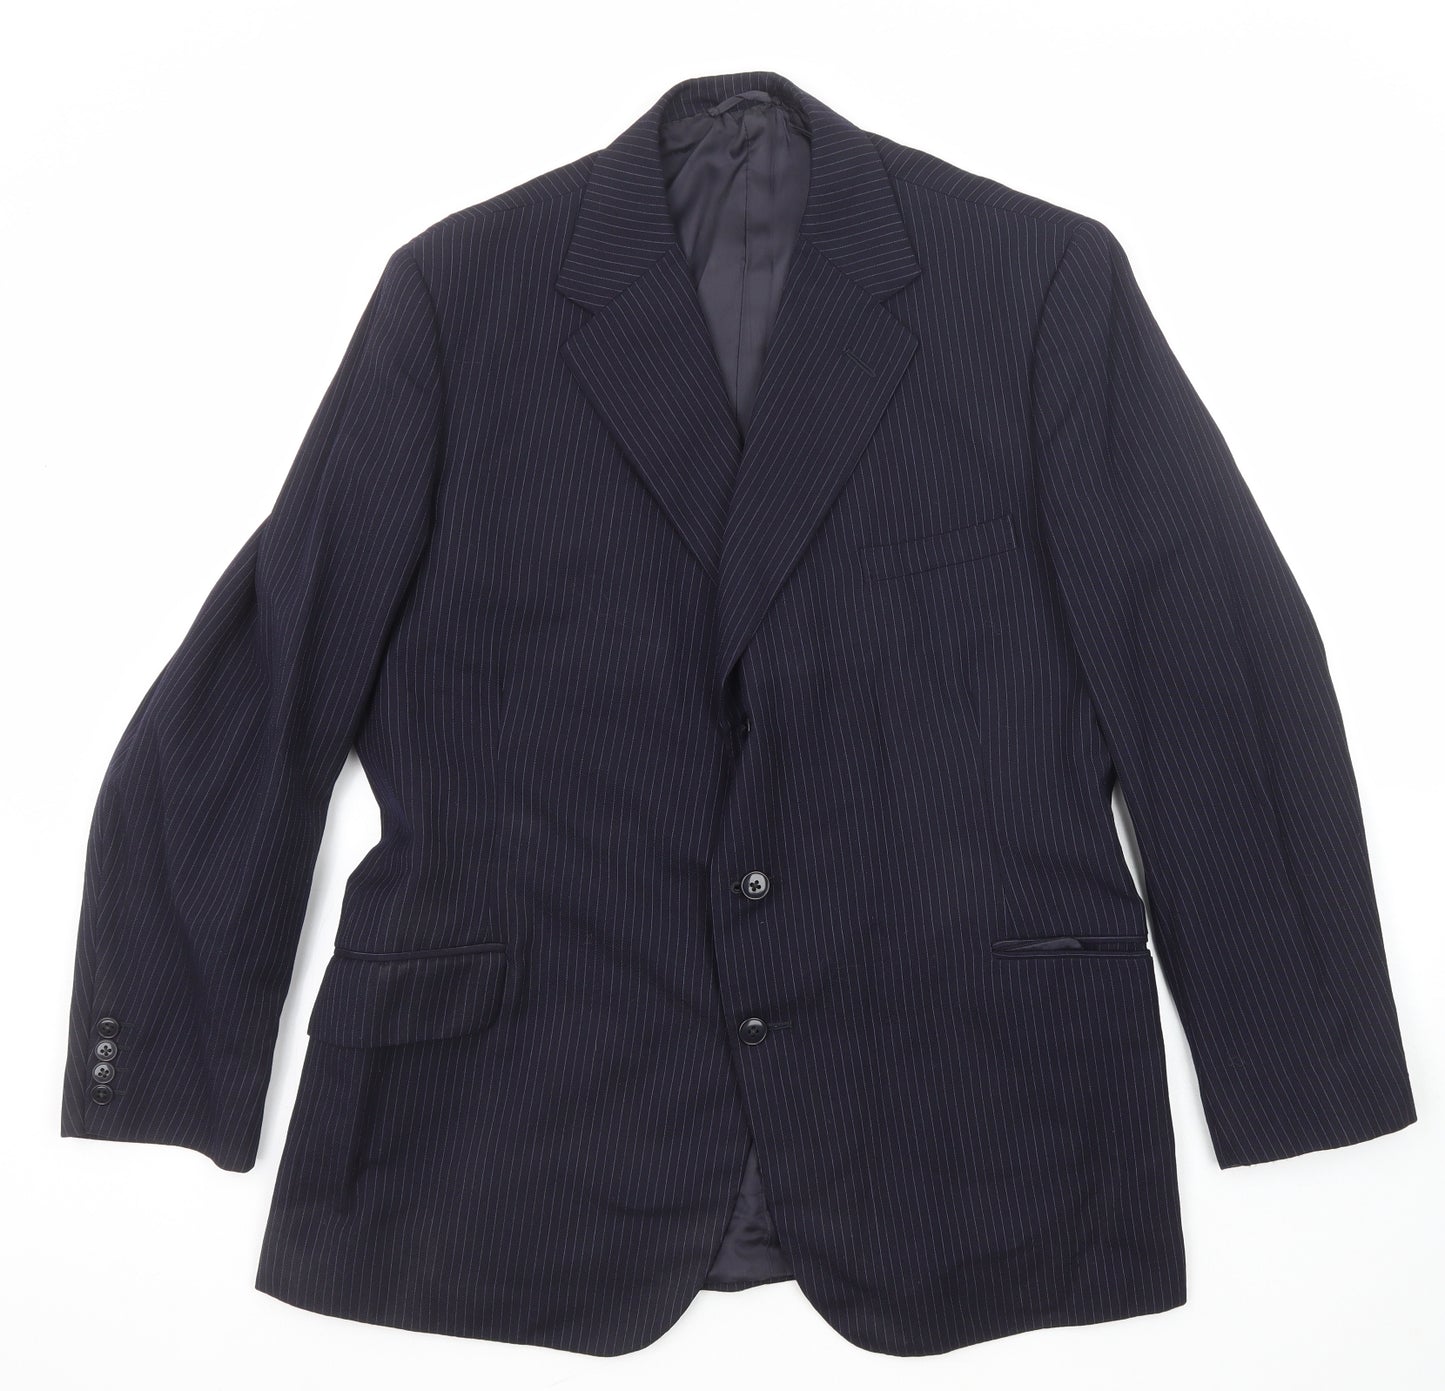 Moss Bros Mens Blue Striped Cotton Jacket Suit Jacket Size 44 Regular